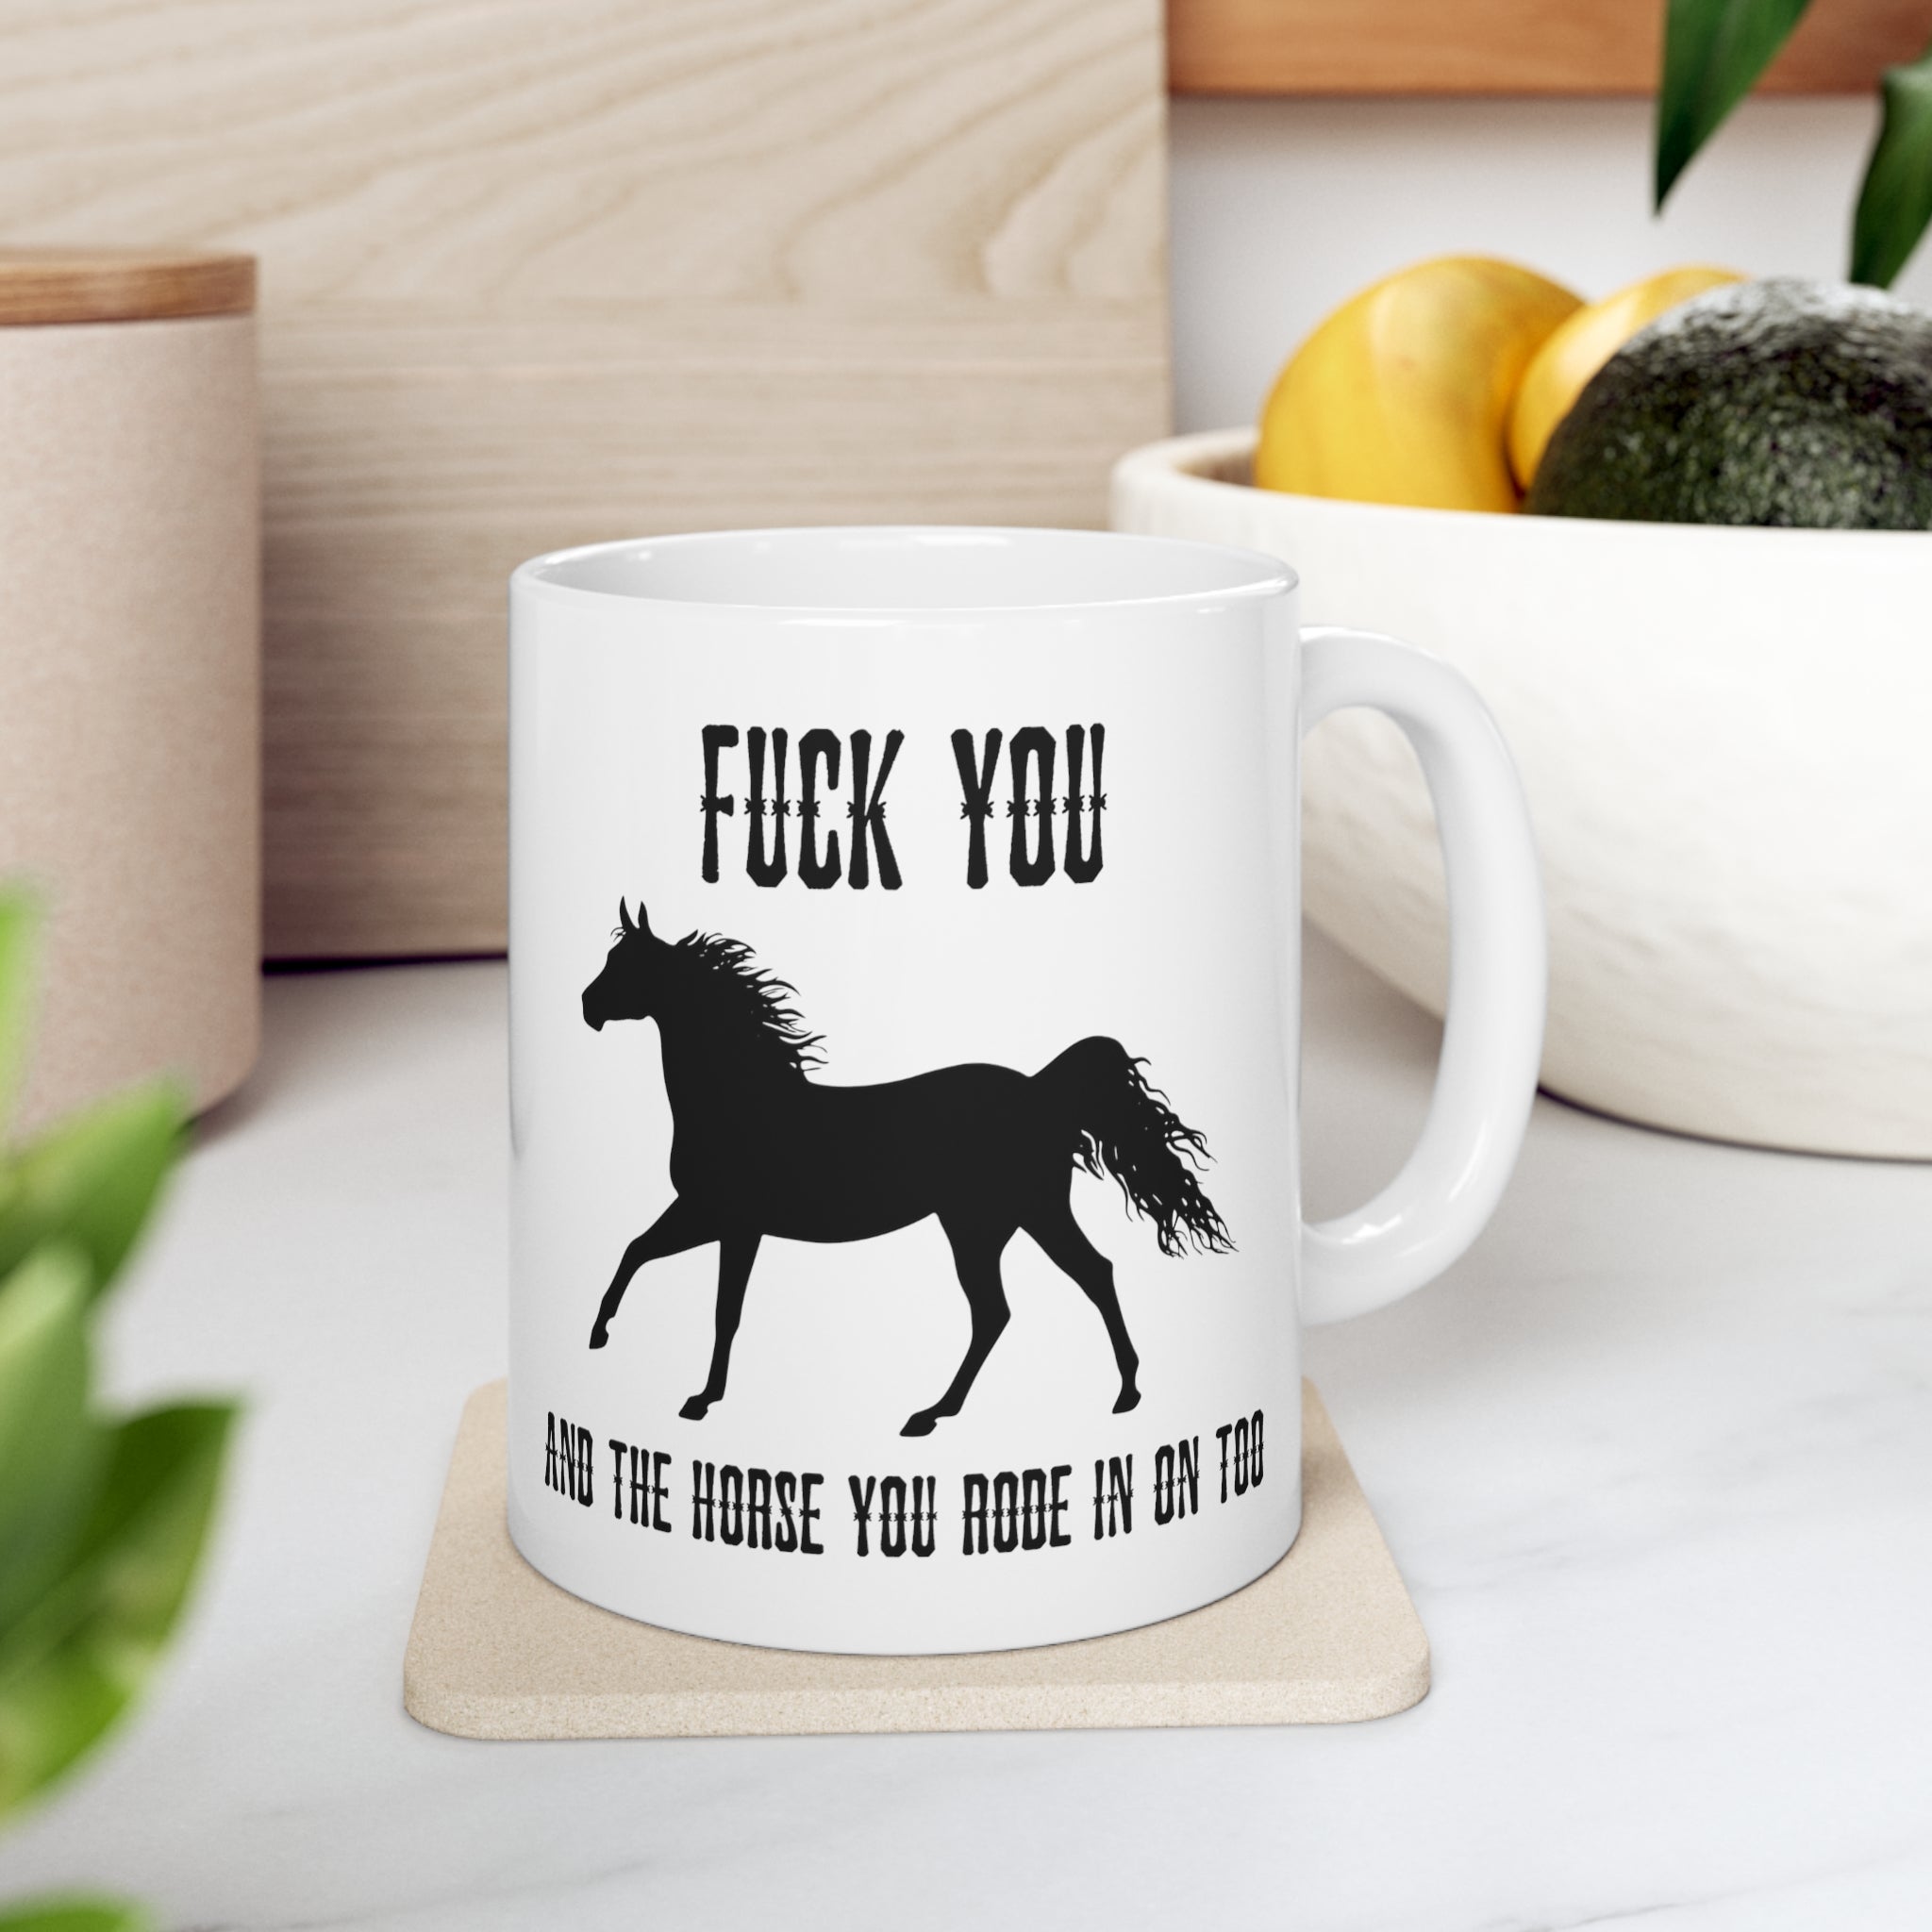 Fuck You Horse Mug Funny Horse Ceramic Coffee Mug 11 ounce Coffee Cup Tea Cup